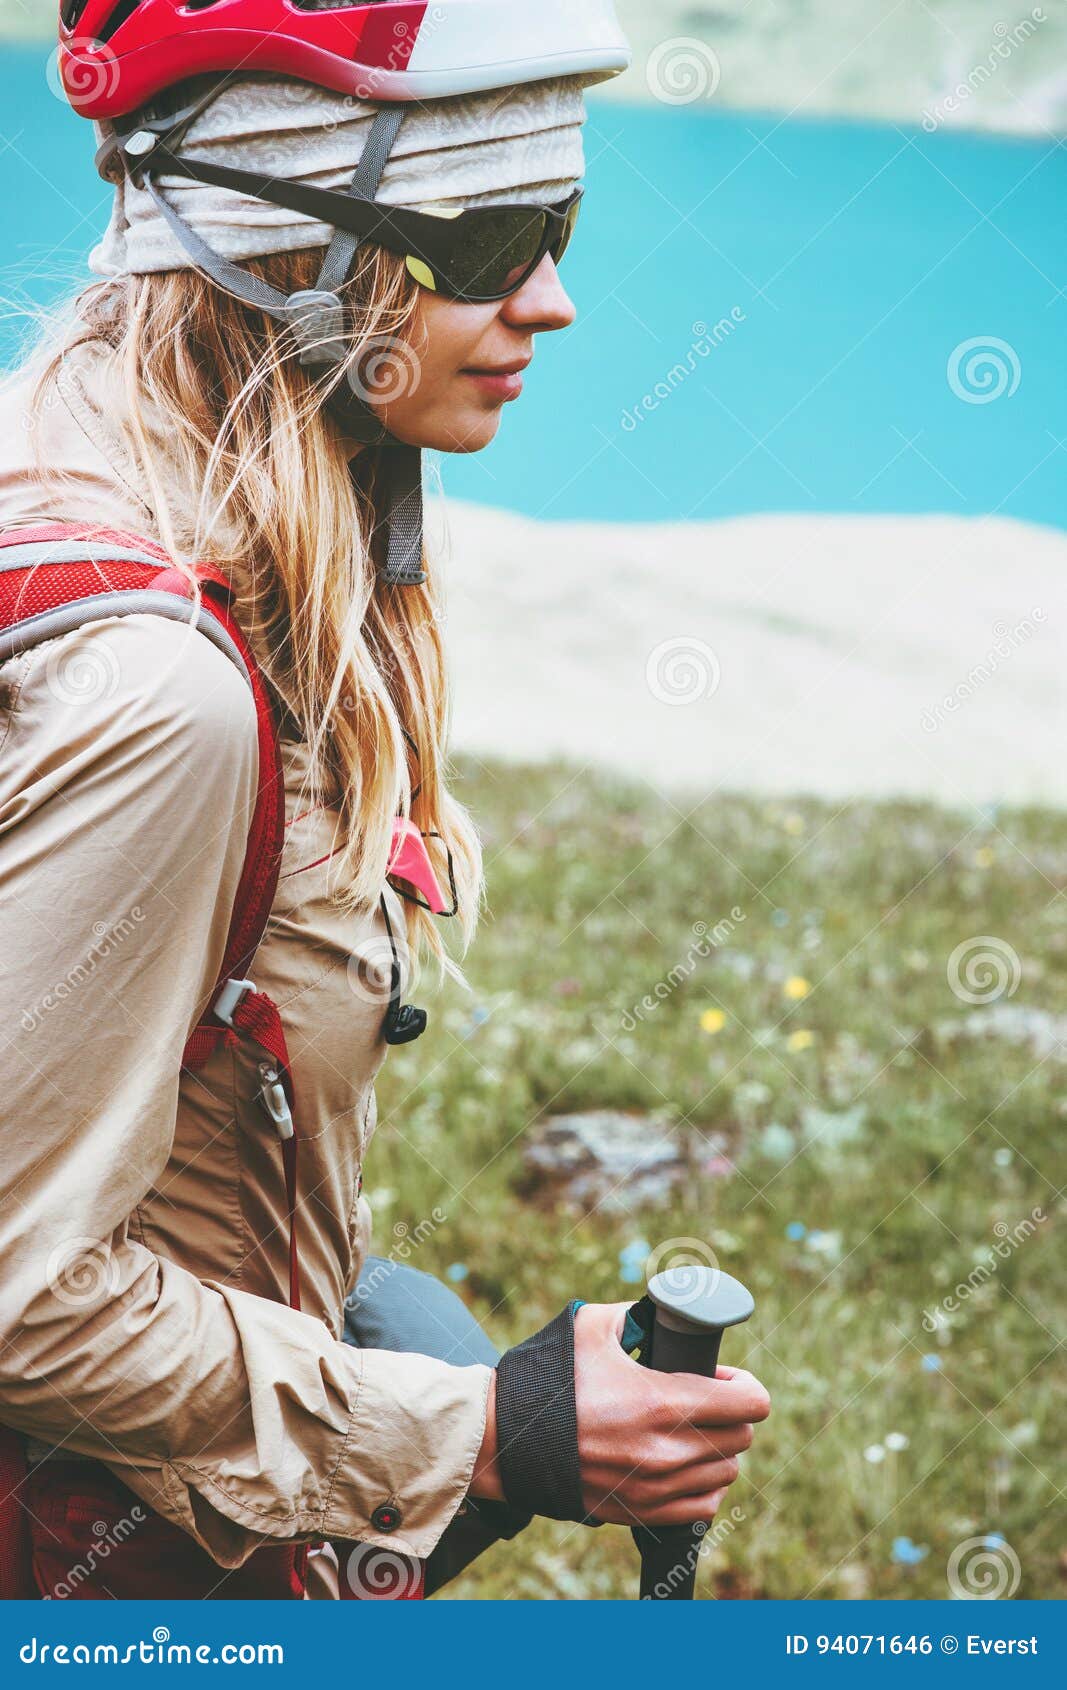 woman hiking travel lifestyle wanderlust concept